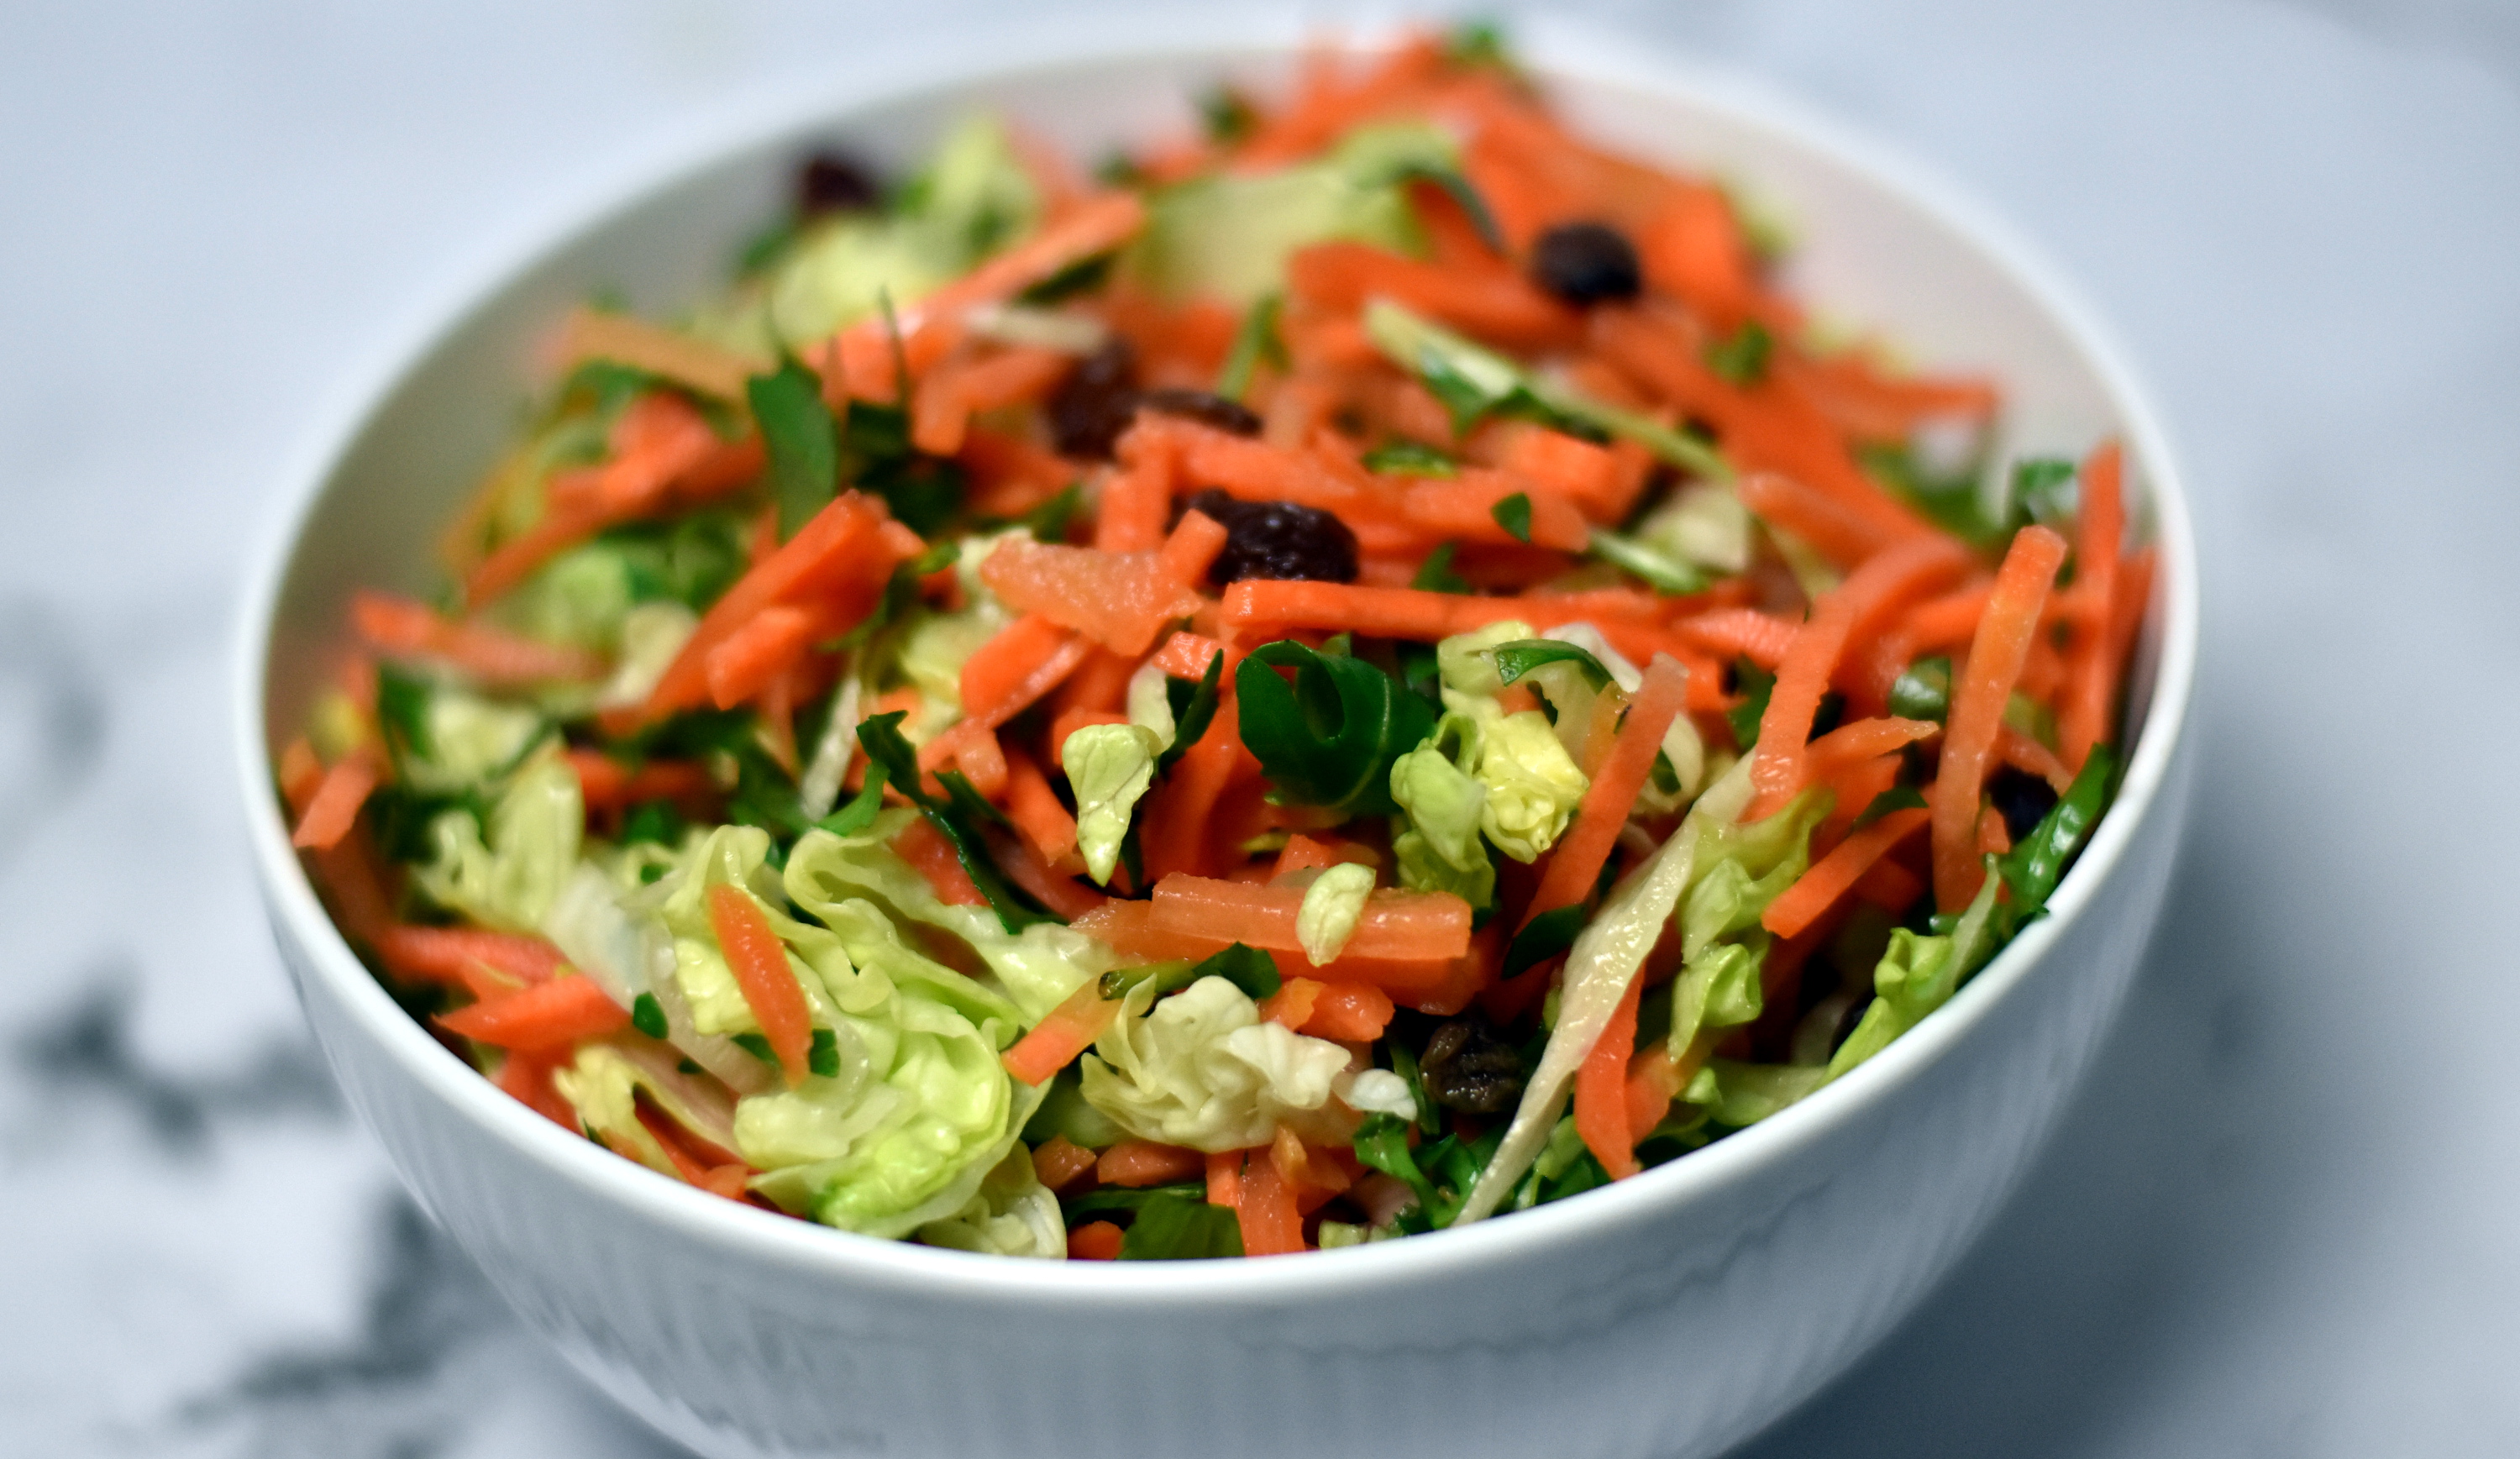 Gulerodssalat med iceberg og citrondressing er en nem og hurtig salat